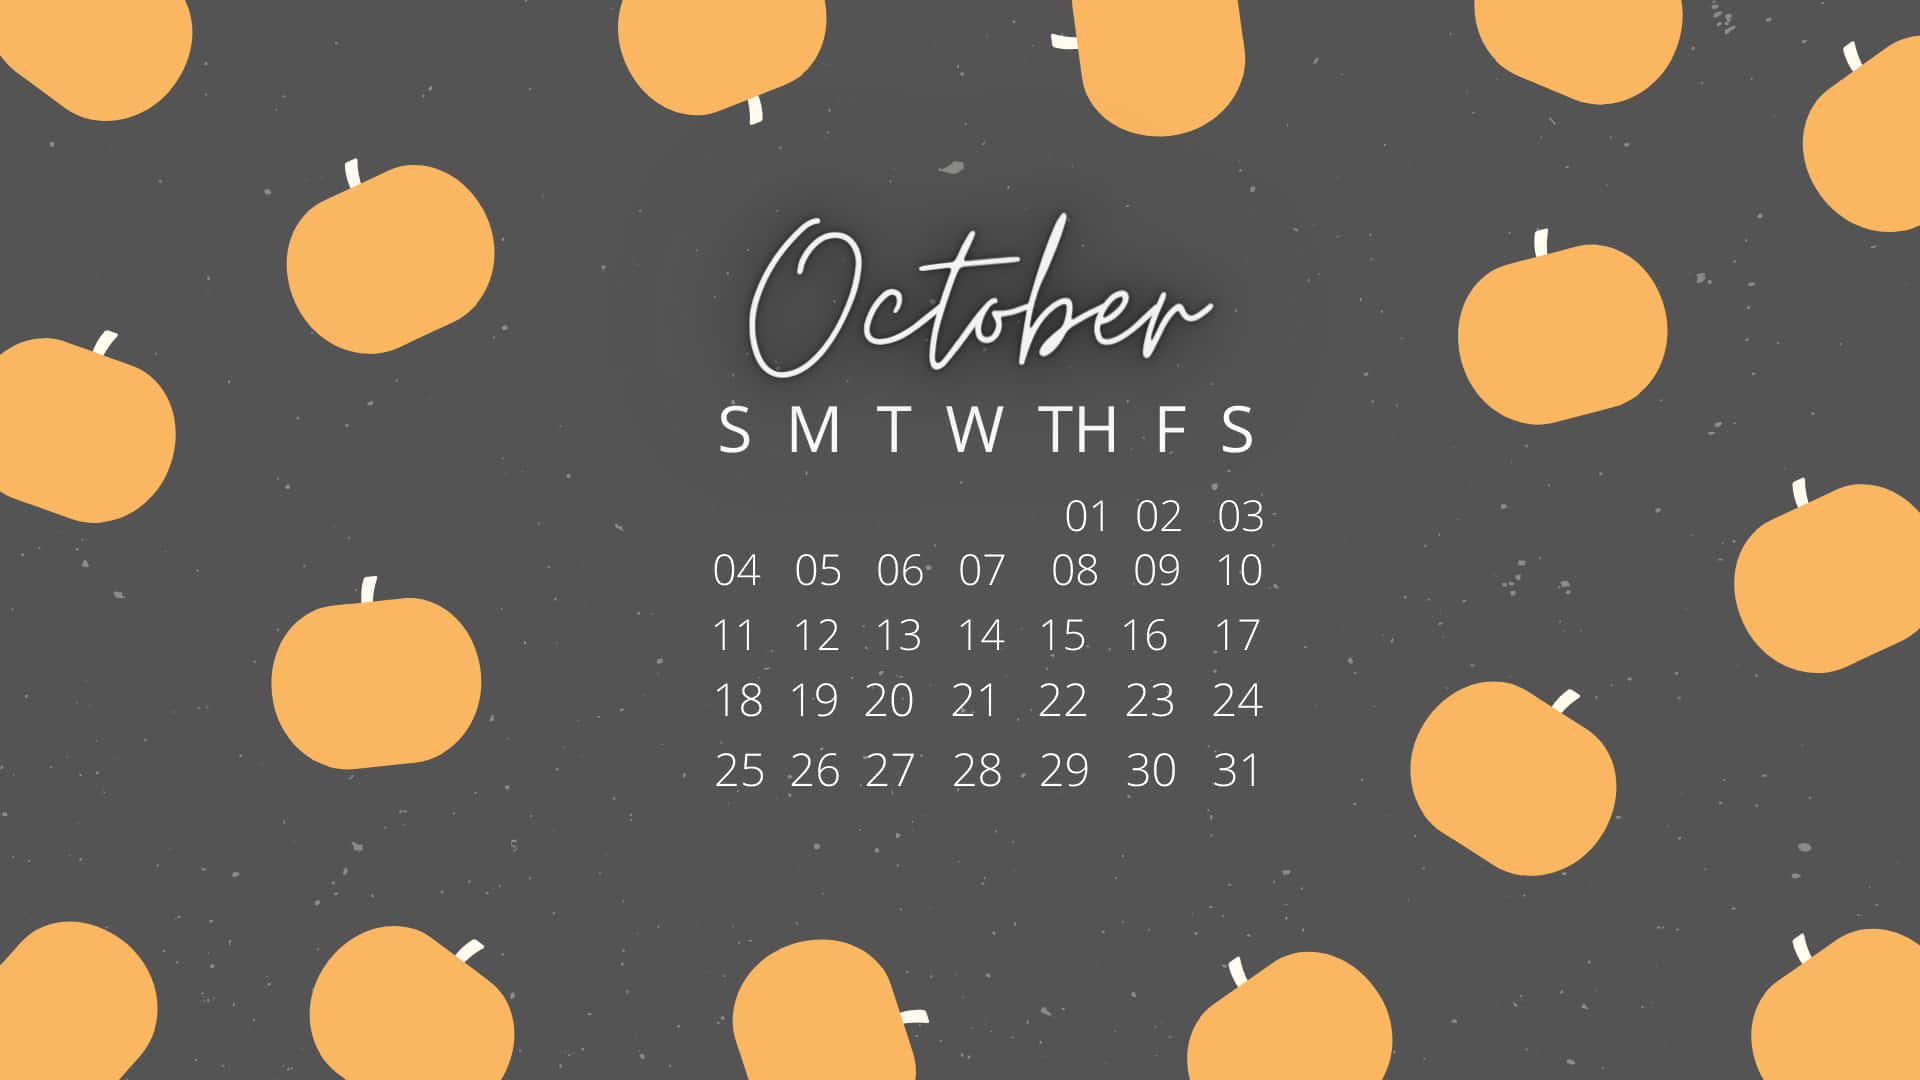 "Let's Make October Fun!" Wallpaper